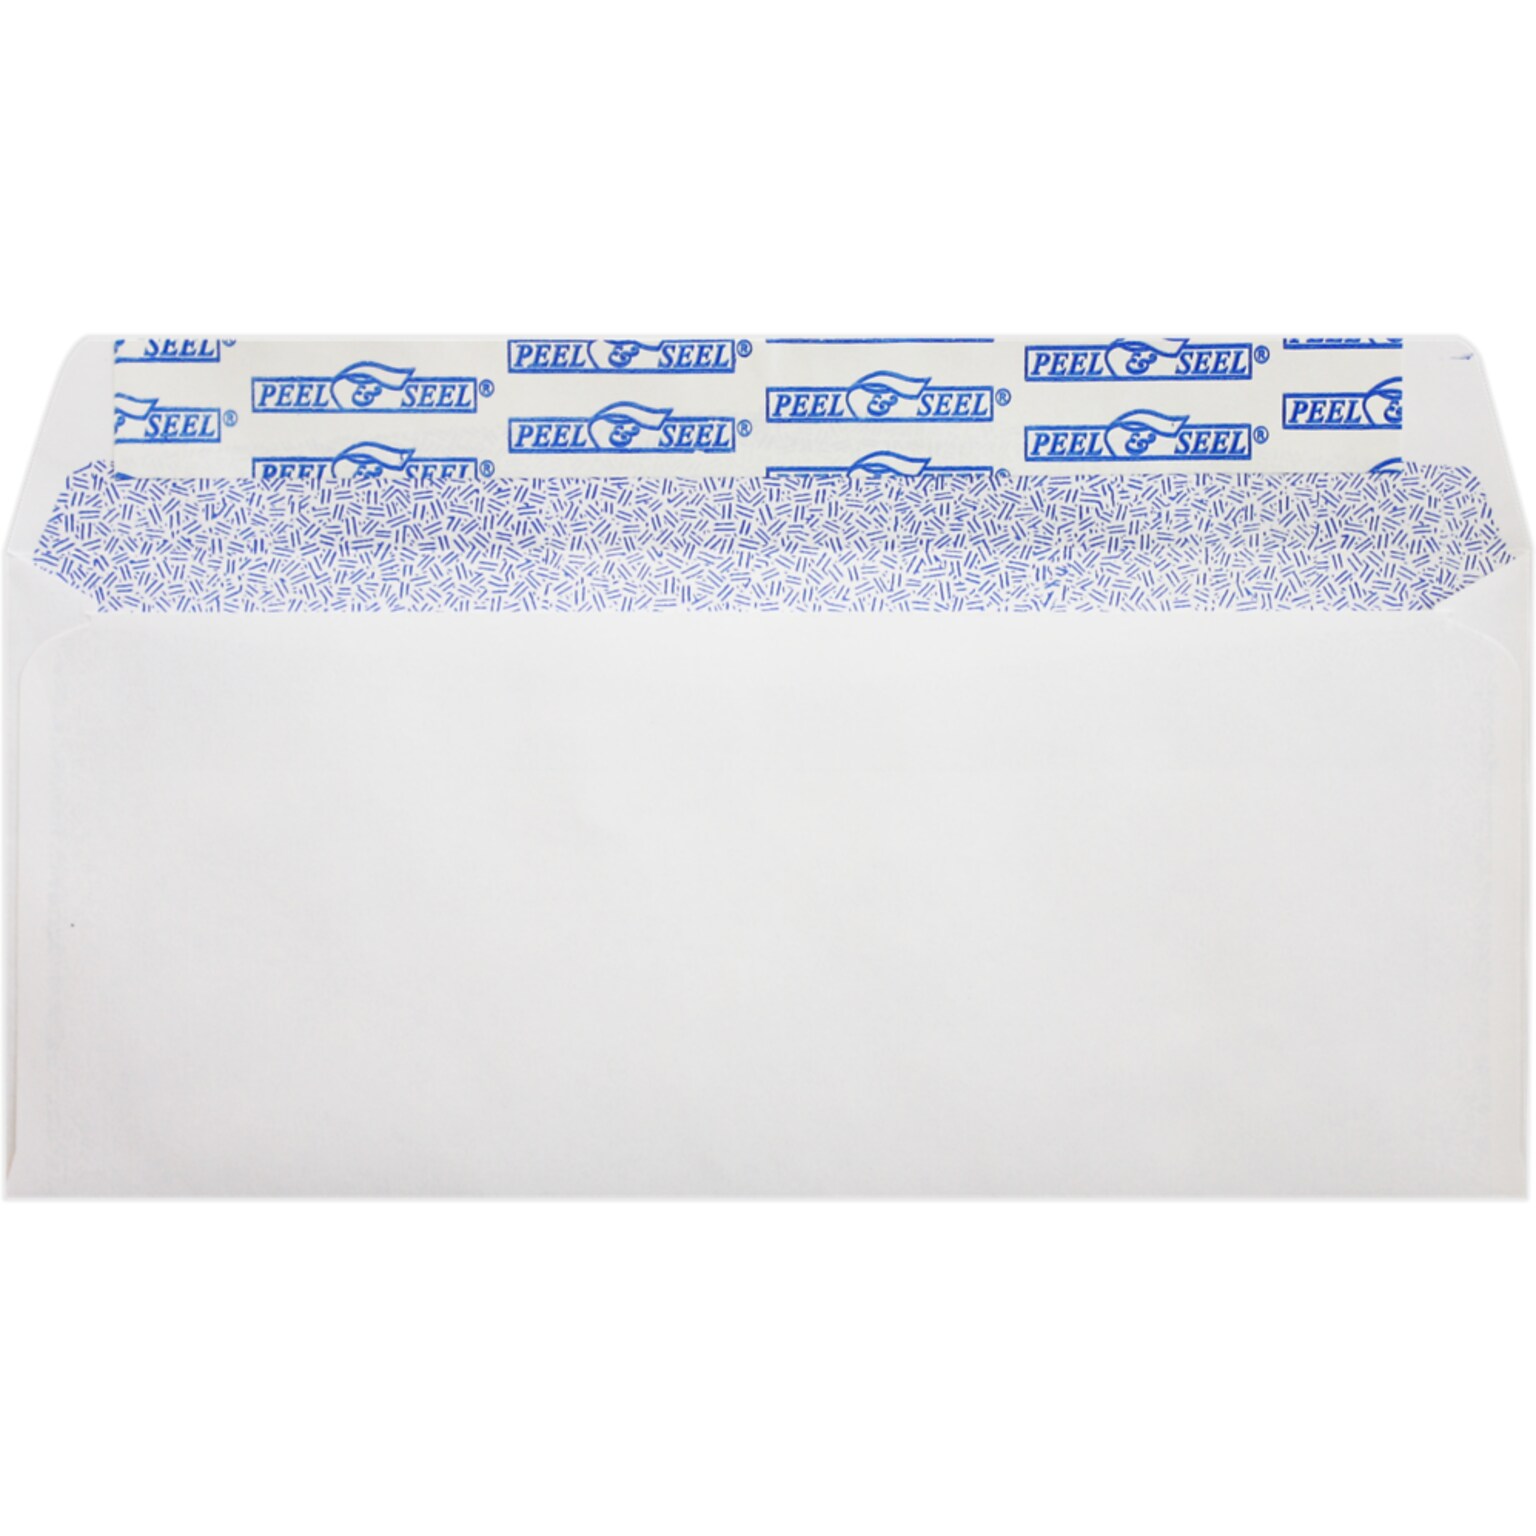 JAM Paper #10 Regular Envelopes, Peel & Press, Security Tint, 4 1/8 x 9 1/2, 24lb, White Wove, 100 Pack (75747-100)